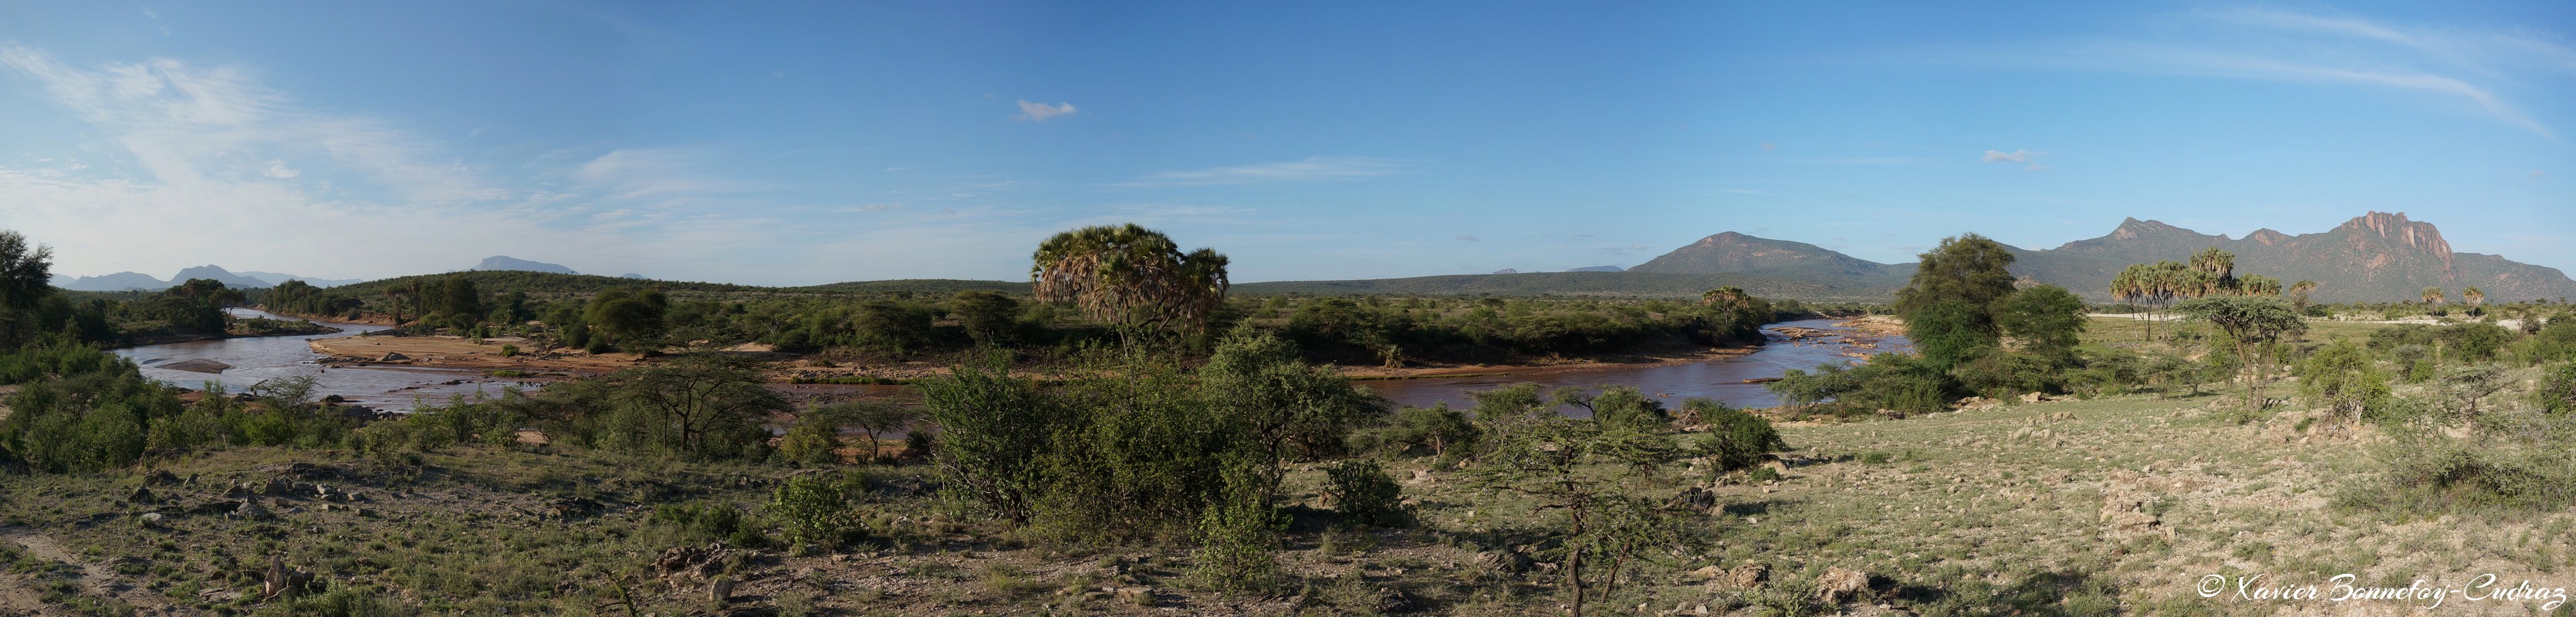 Shaba - Panorama Ewaso Ngiro river
Mots-clés: Archers Post geo:lat=0.65208900 geo:lon=37.72931300 geotagged KEN Kenya Samburu Isiolo Shaba National Reserve Ewaso Ngiro river Riviere Montagne panorama